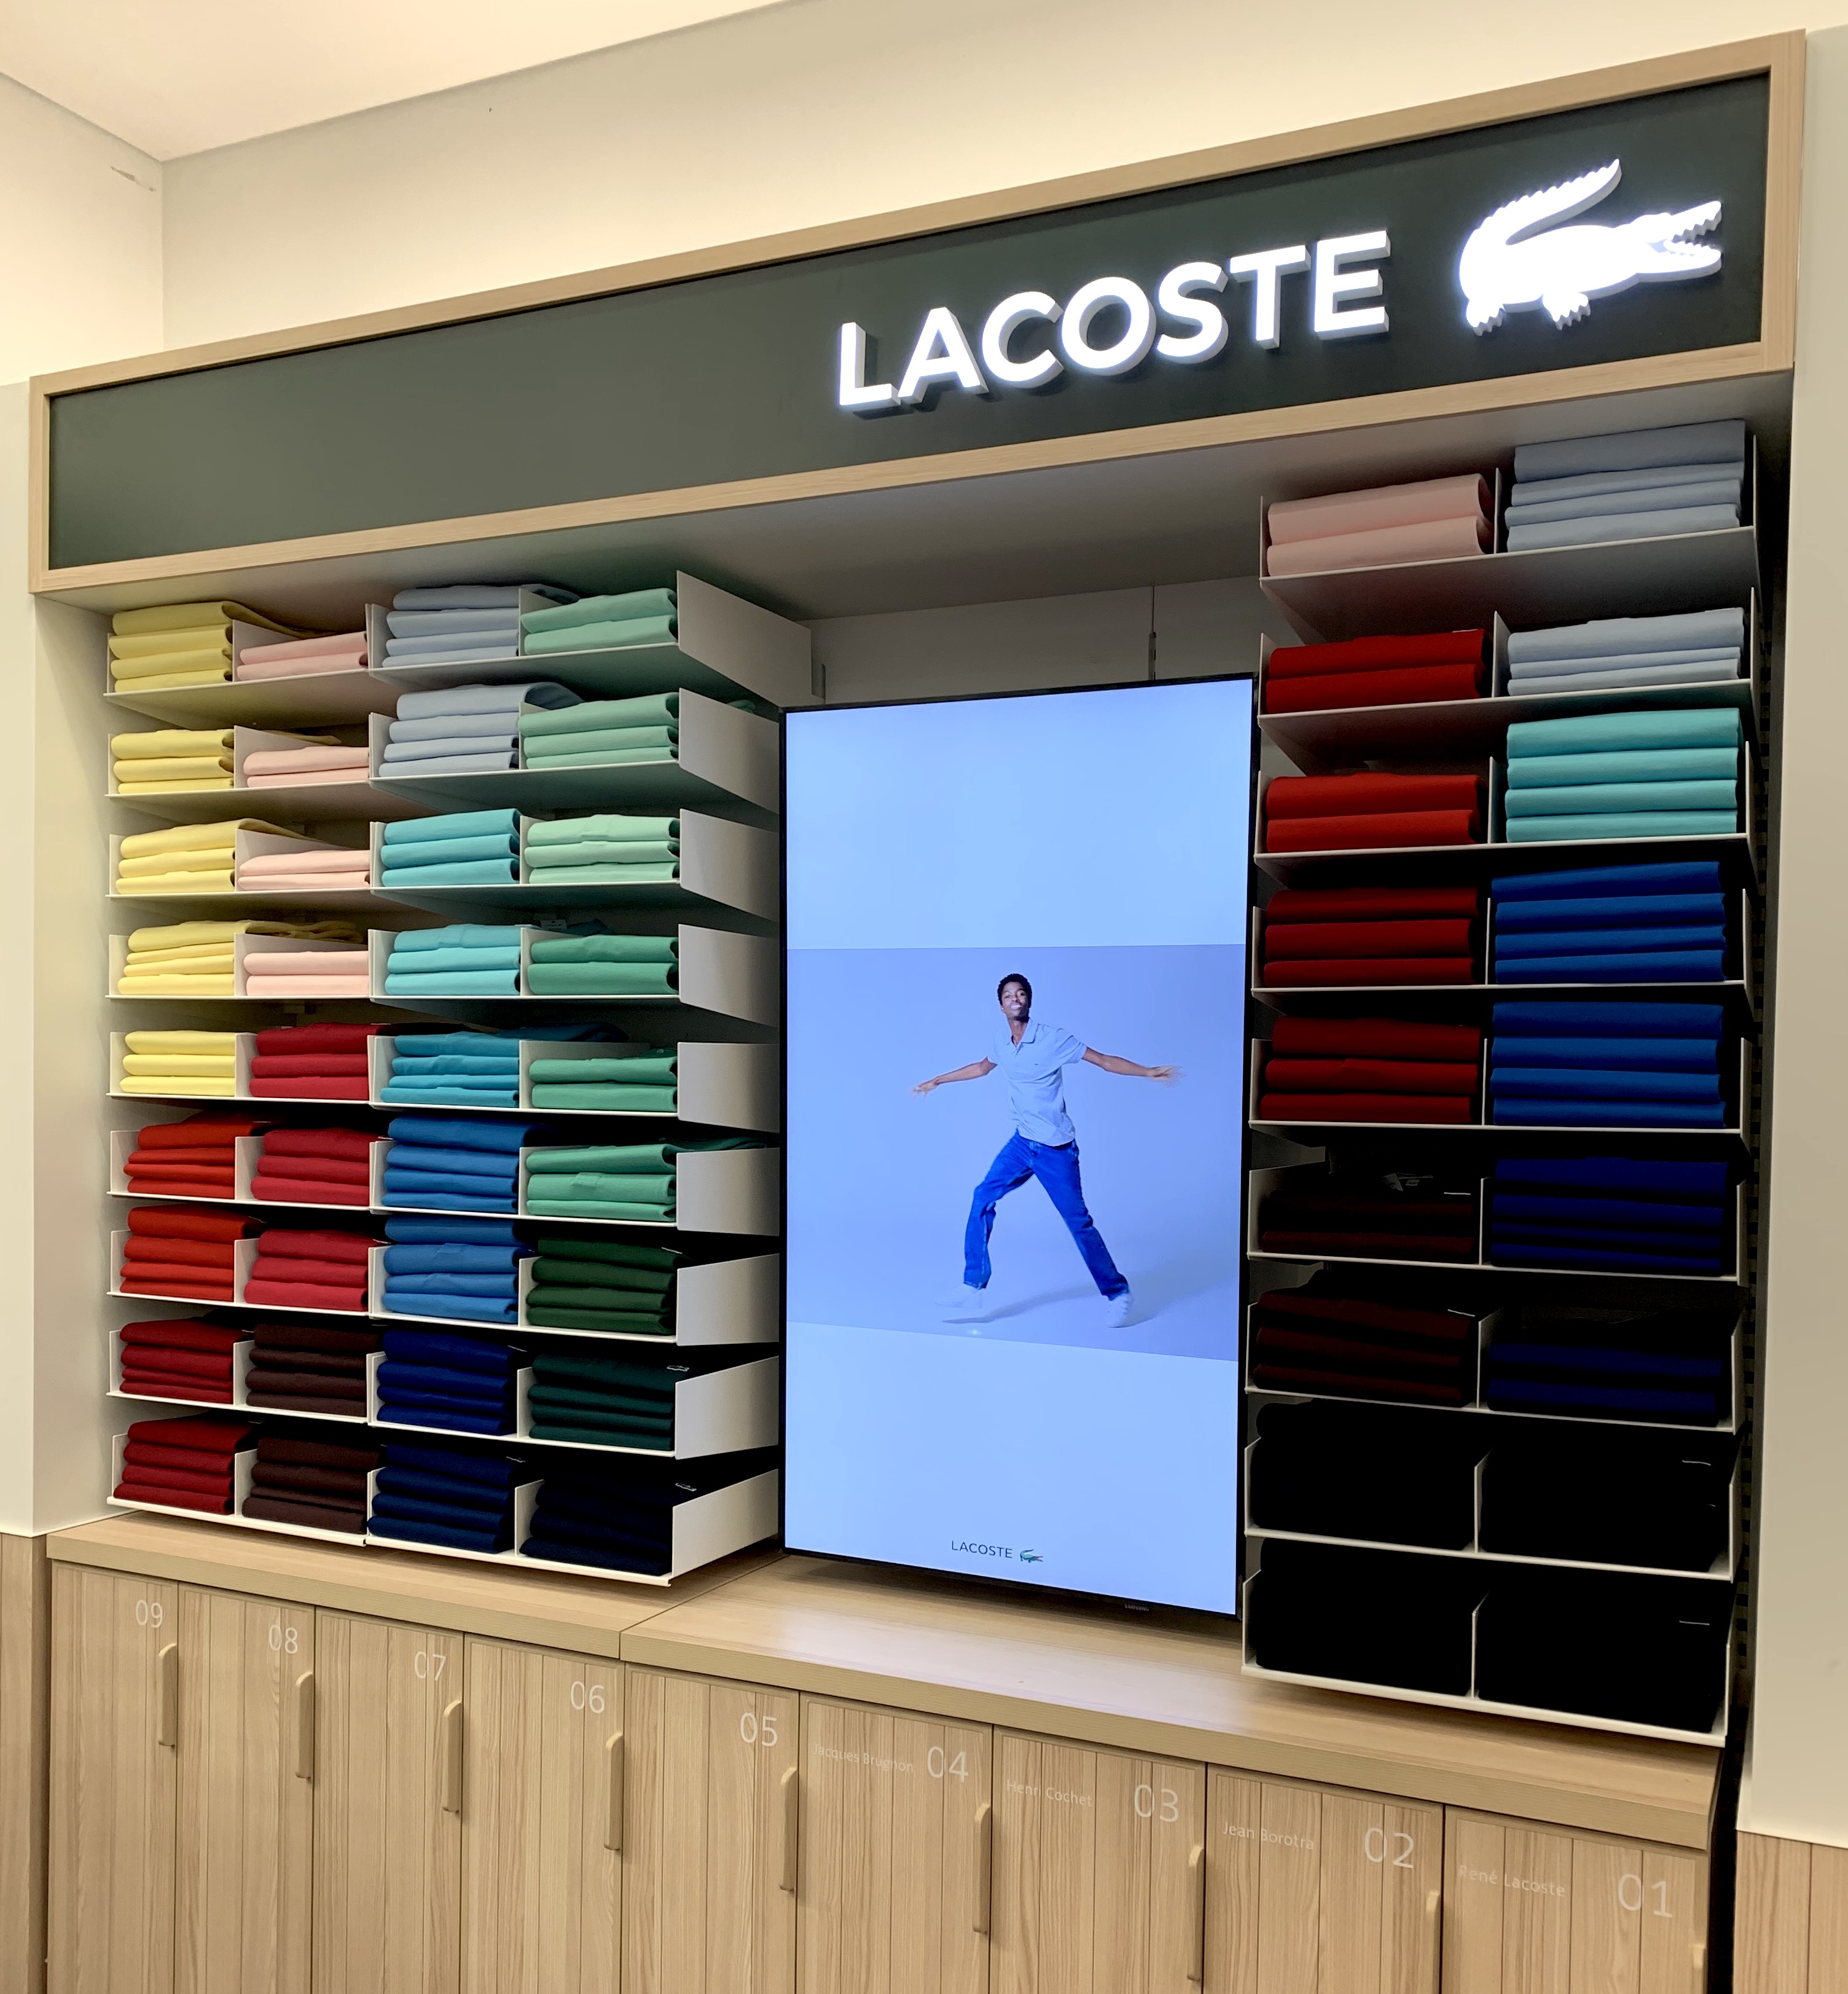 Lacoste - THE INTERNATIONAL FUSION CORPORATION